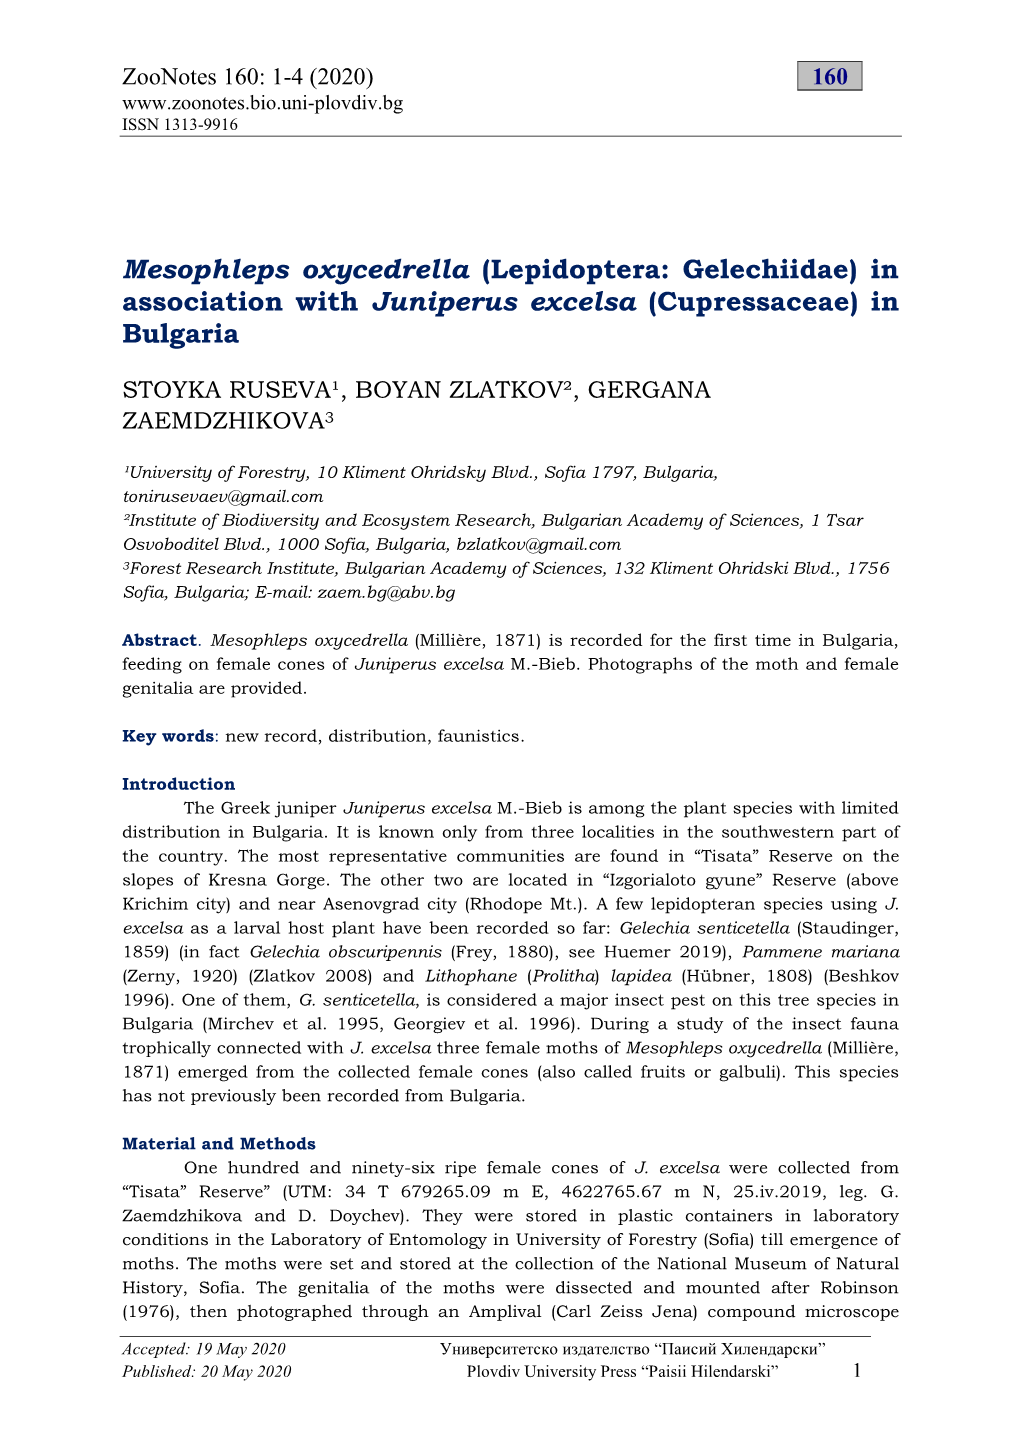 Lepidoptera: Gelechiidae) in Association with Juniperus Excelsa (Cupressaceae) in Bulgaria